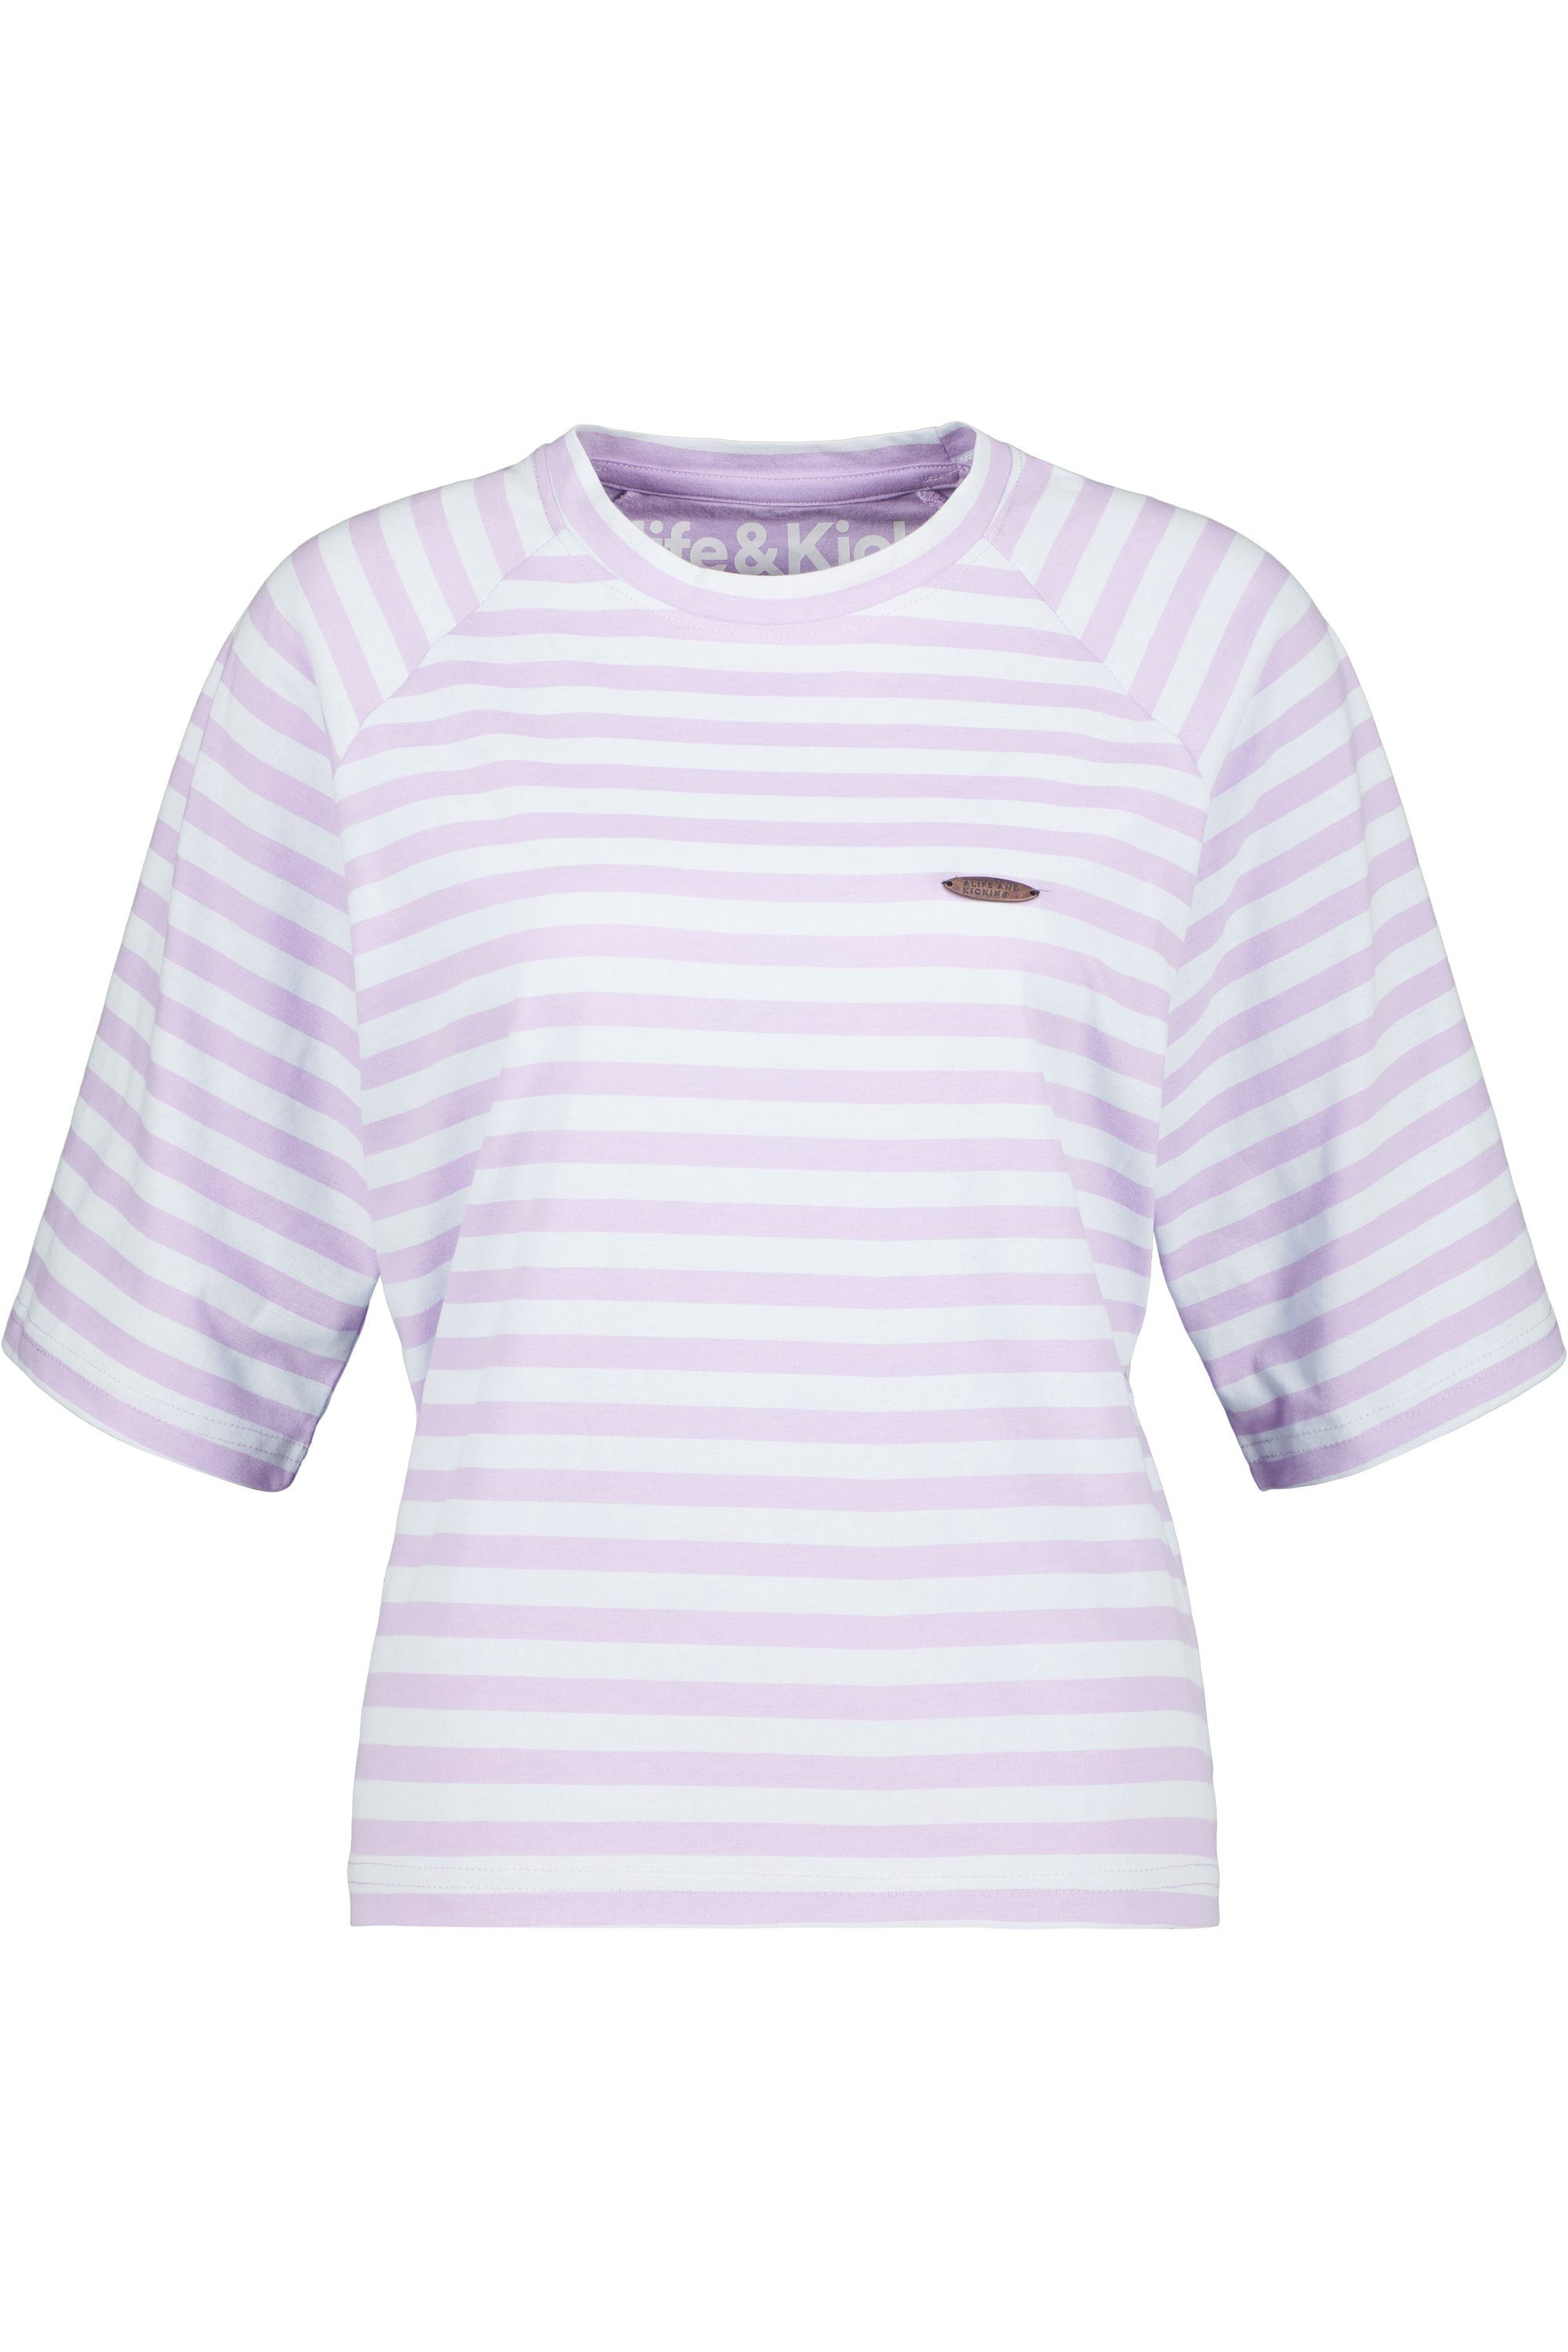 Alife & Shirt Z Kurzarmshirt, digital RubyAK Rundhalsshirt Kickin Shirt lavender Damen